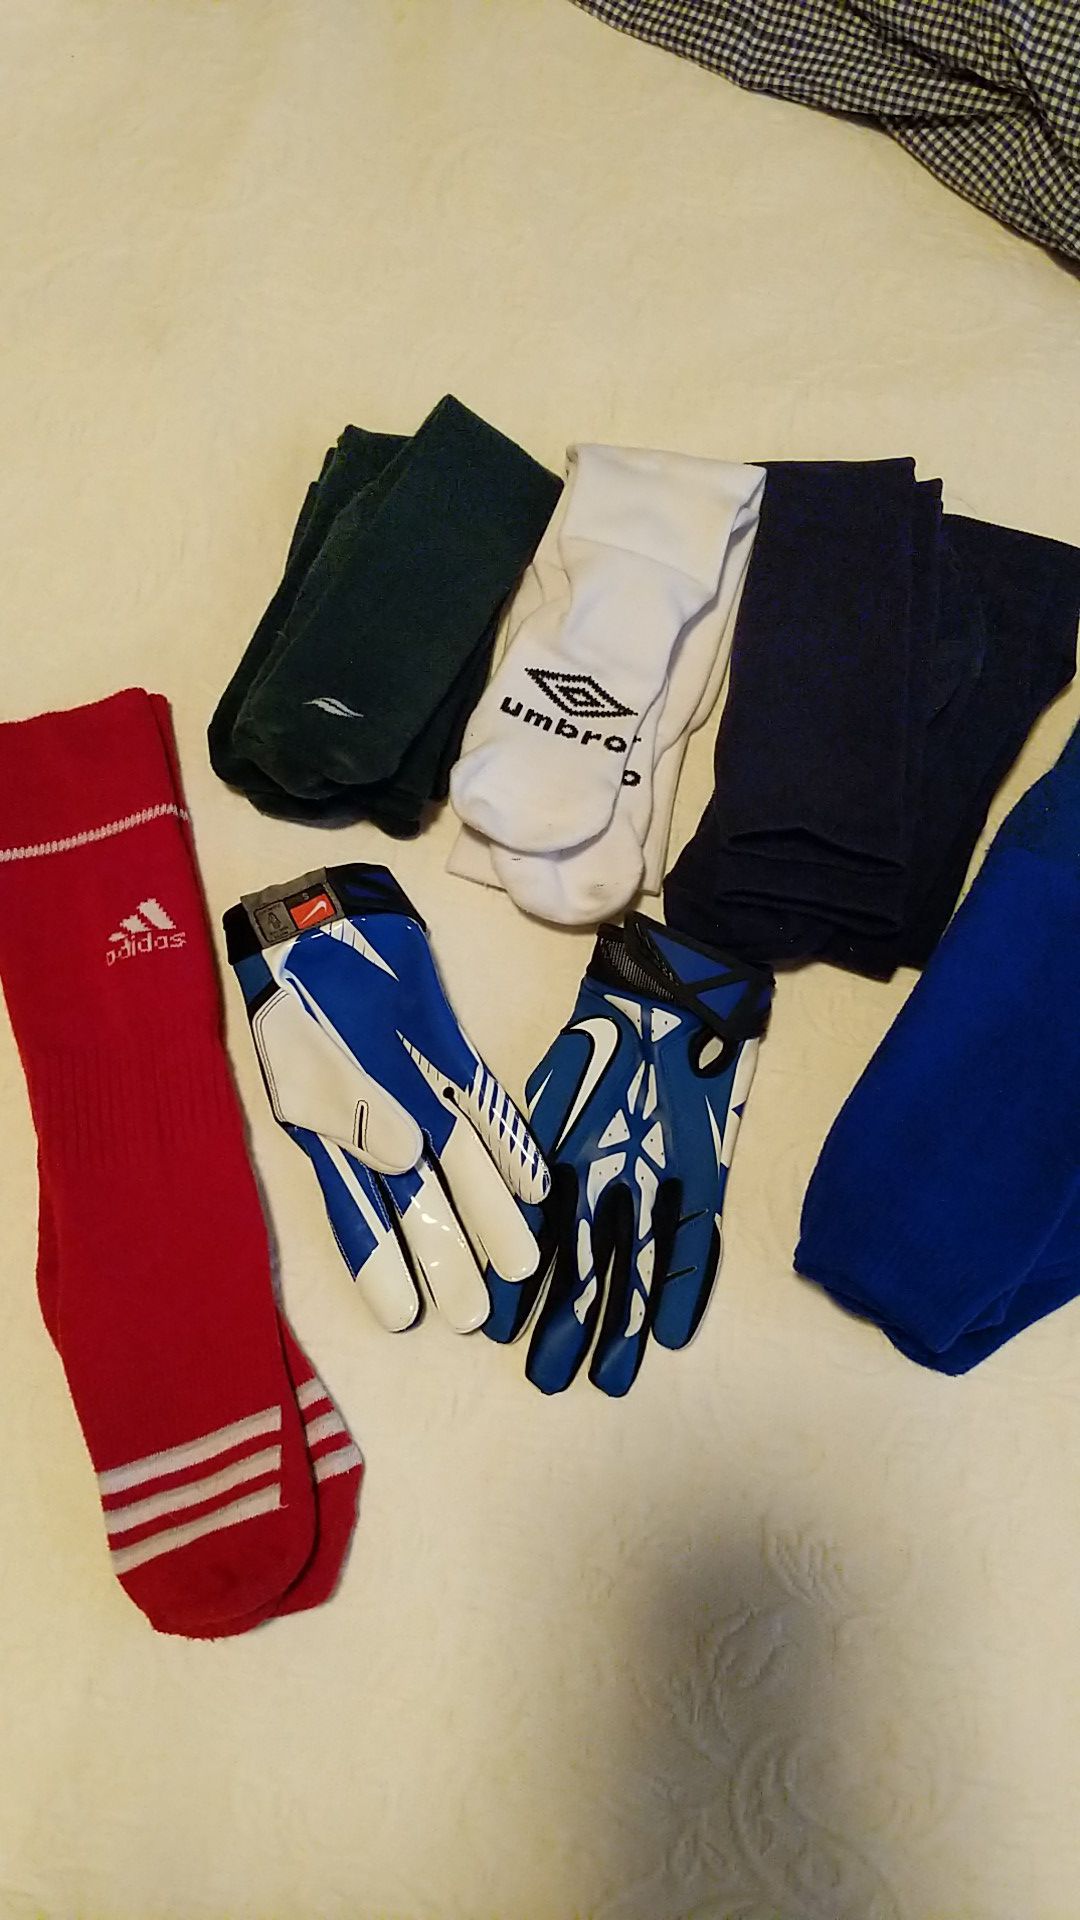 Youth sports socks & Football gloves